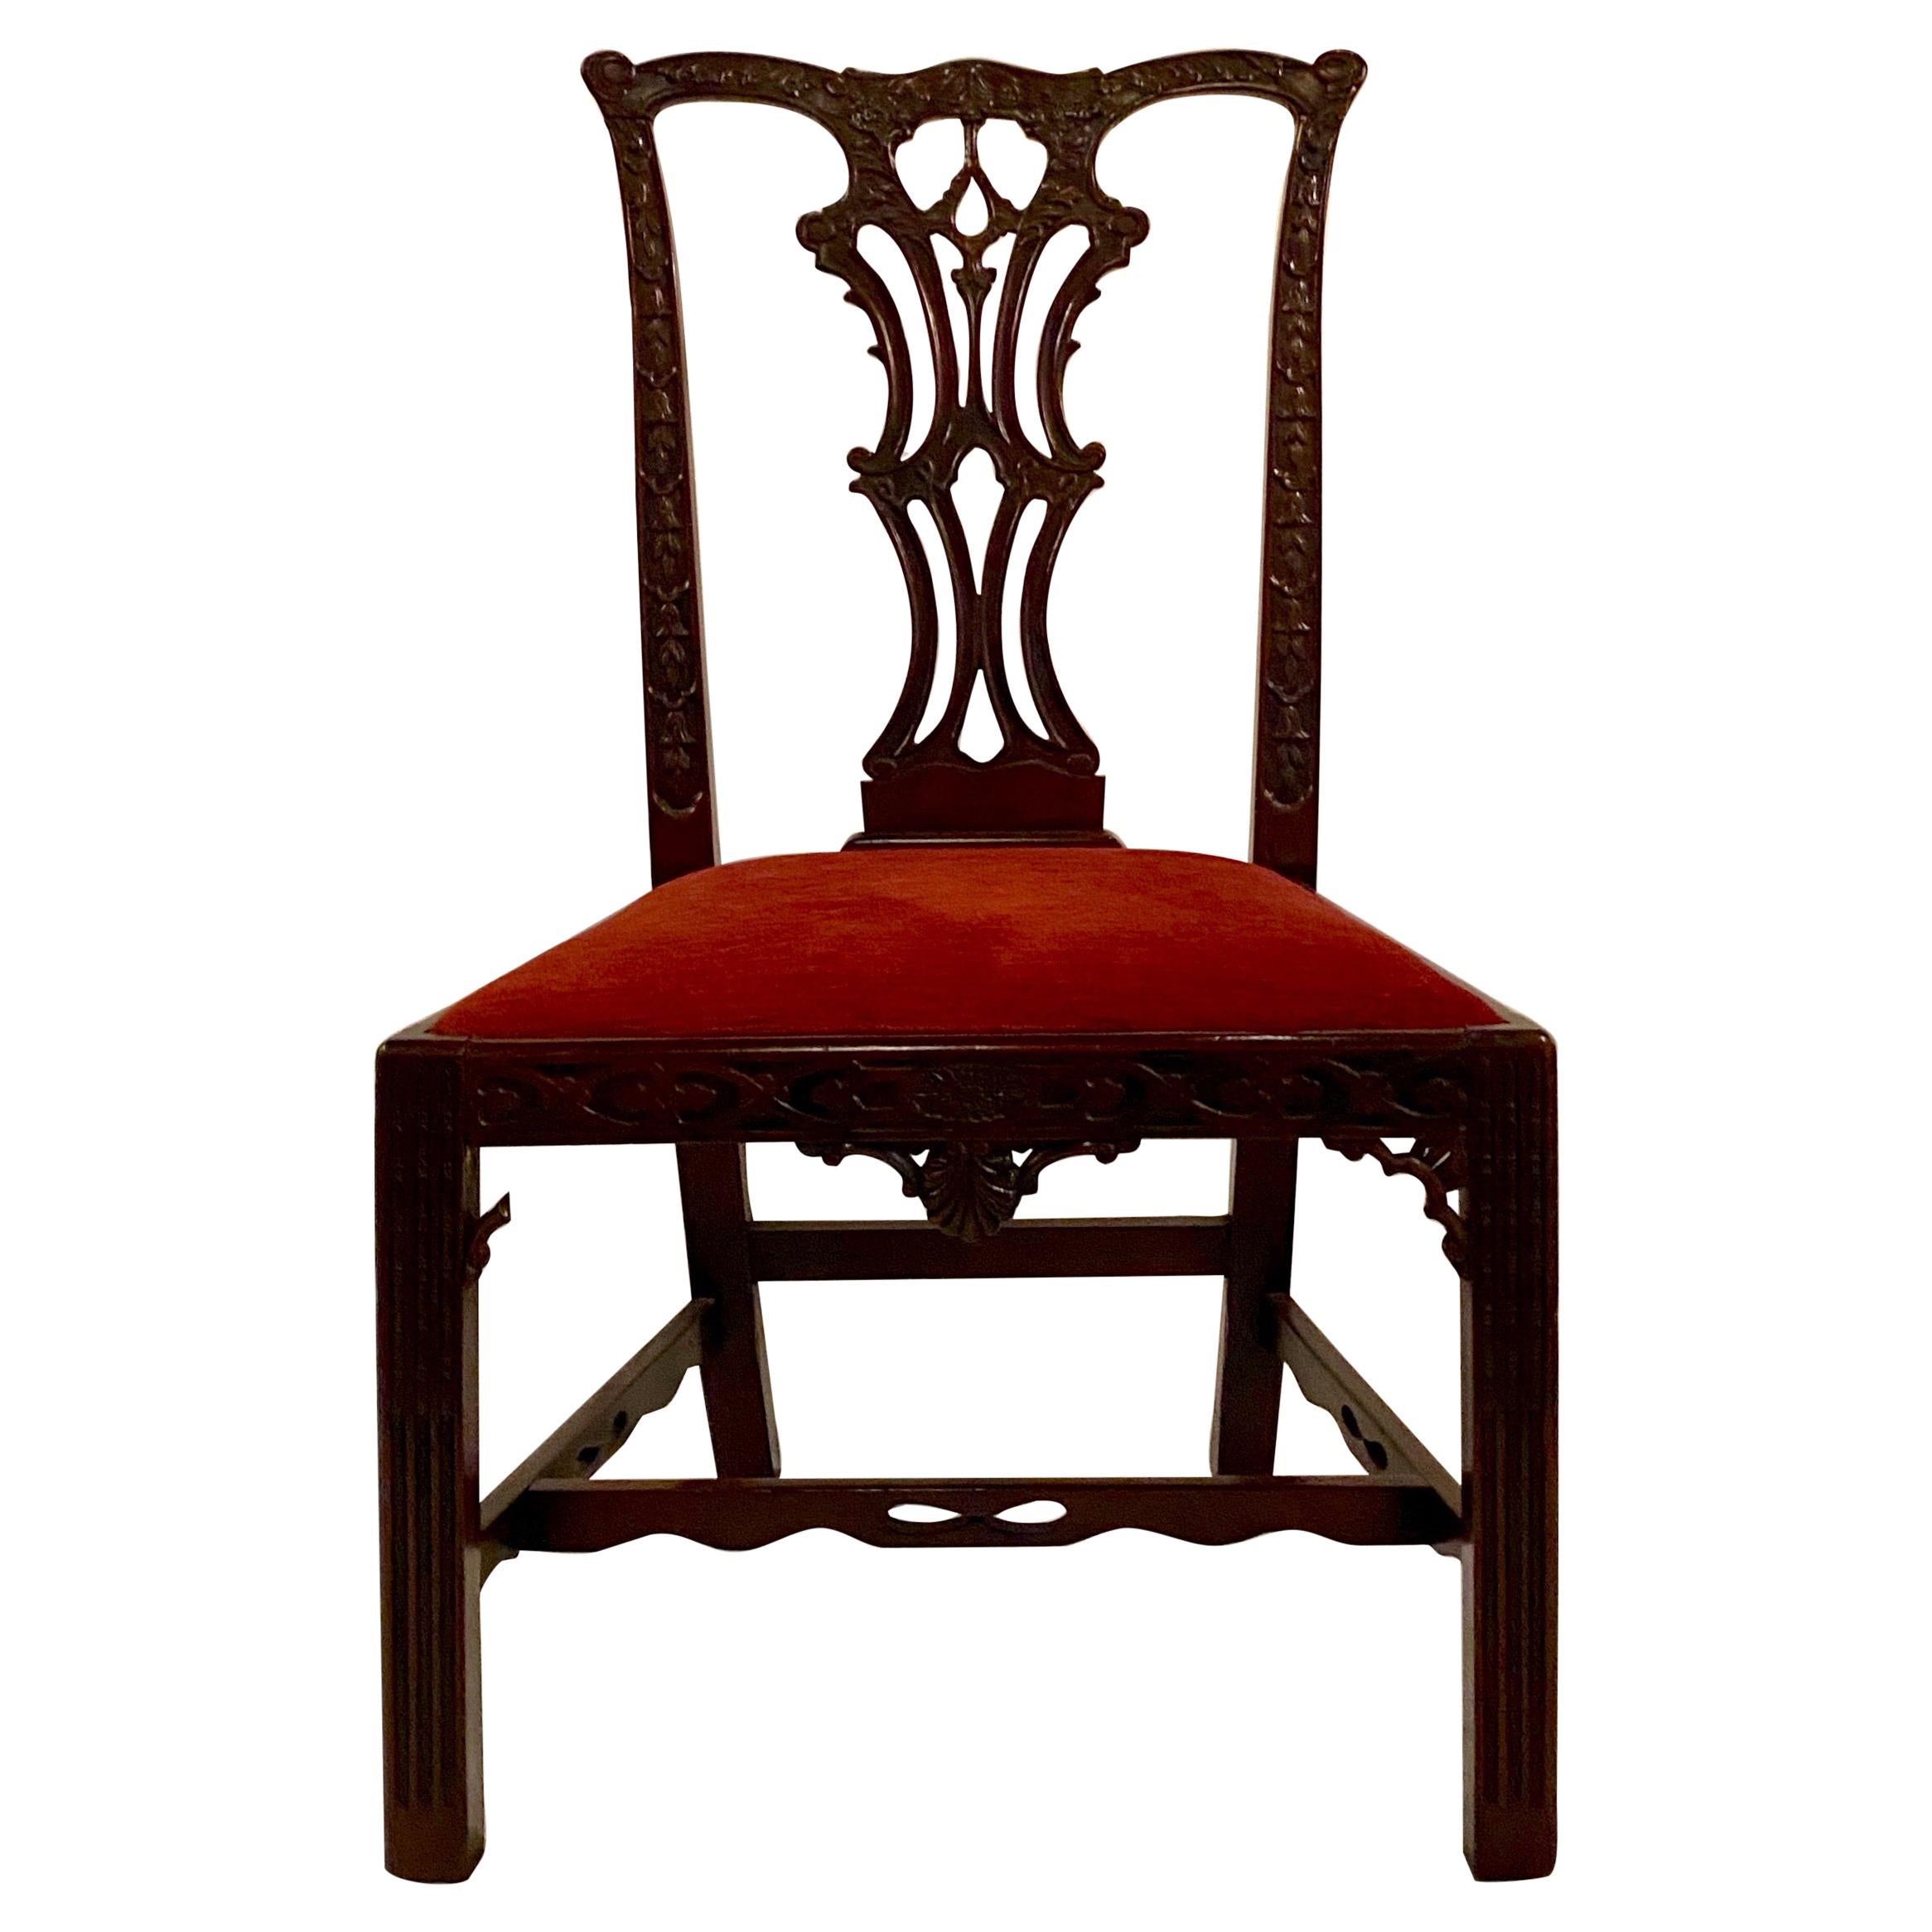 Ancienne chaise anglaise en acajou Fretwork Design Chippendale, circa 1870-1880